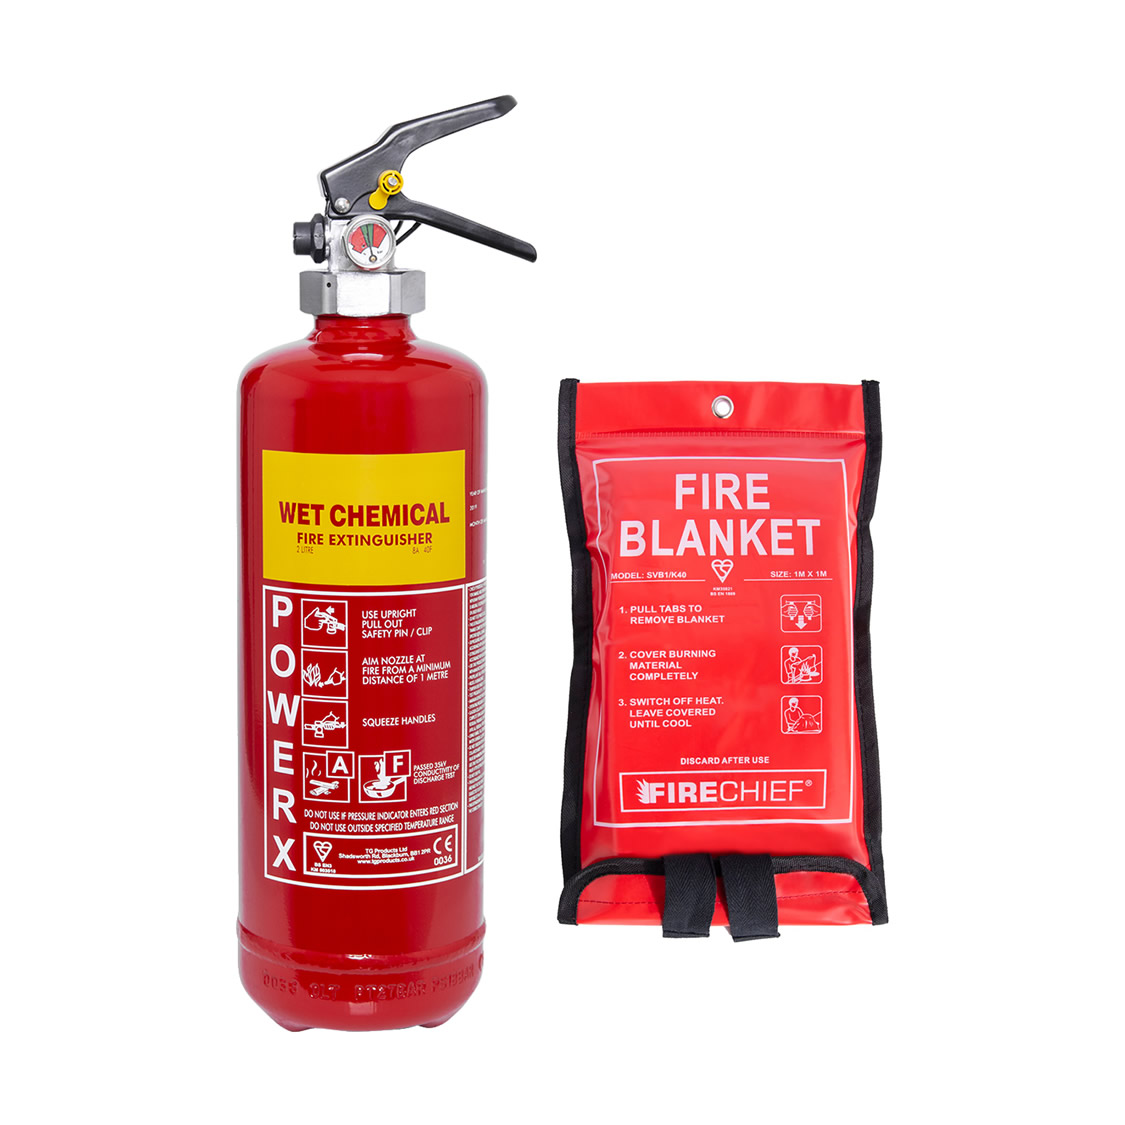 2ltr Wet Chemical Extinguisher + Fire Blanket Offer